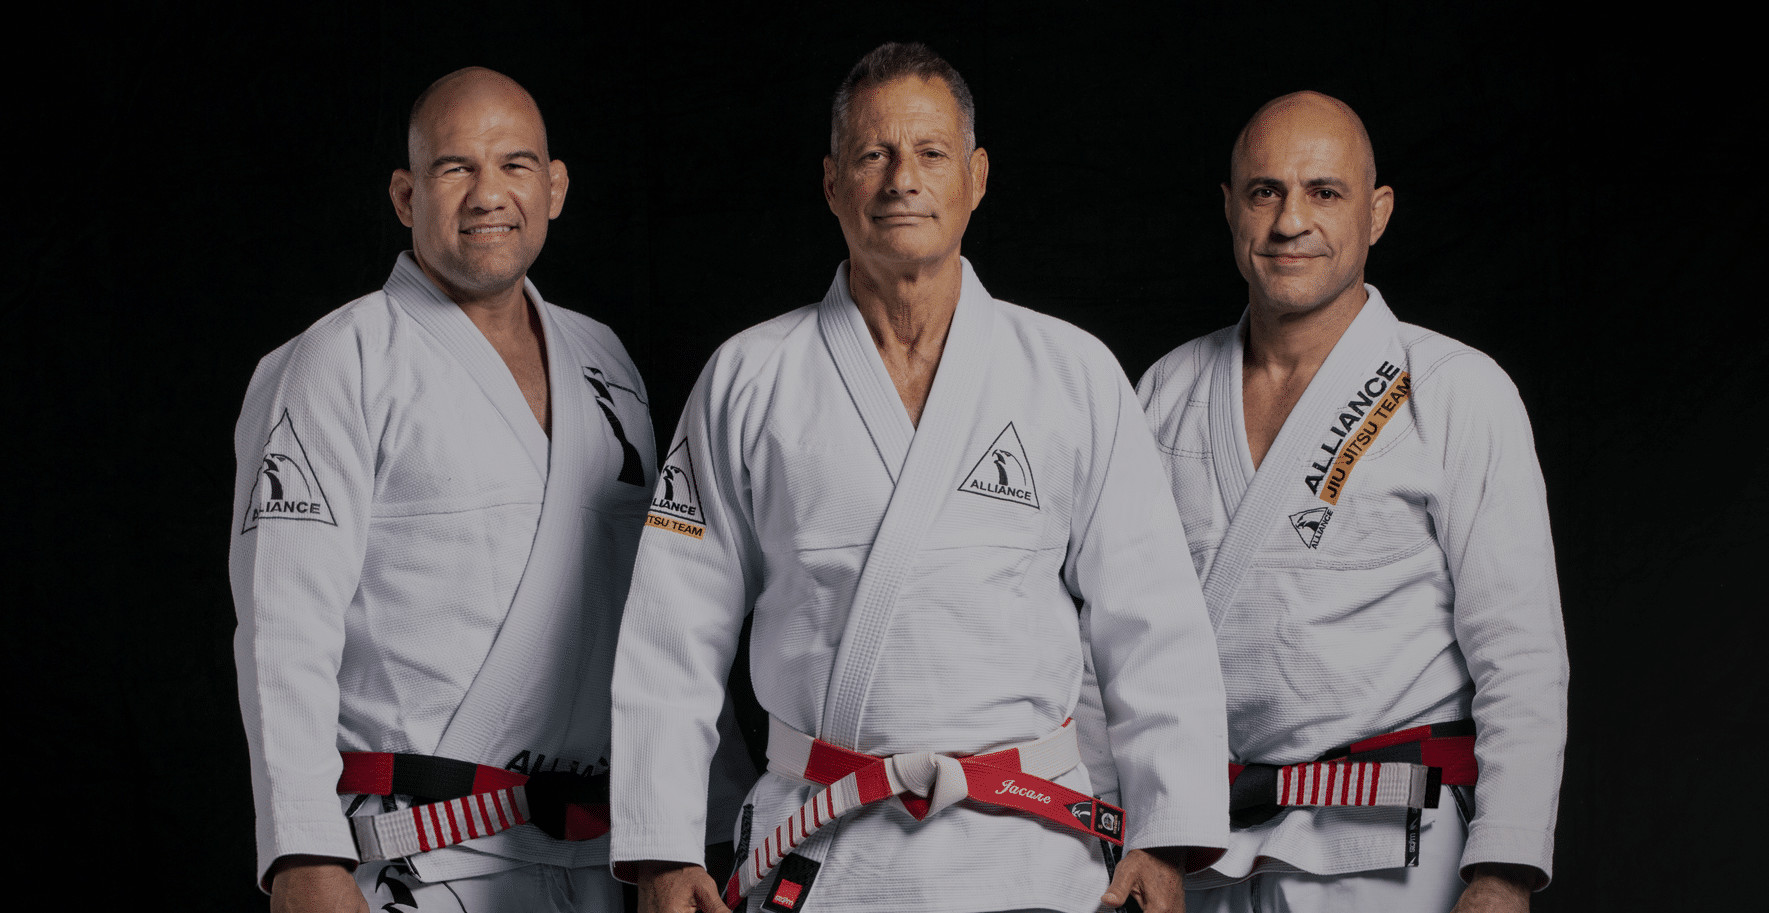 Brazilian Jiu Jitsu Website - Alliance Team by Maurycio Elias on